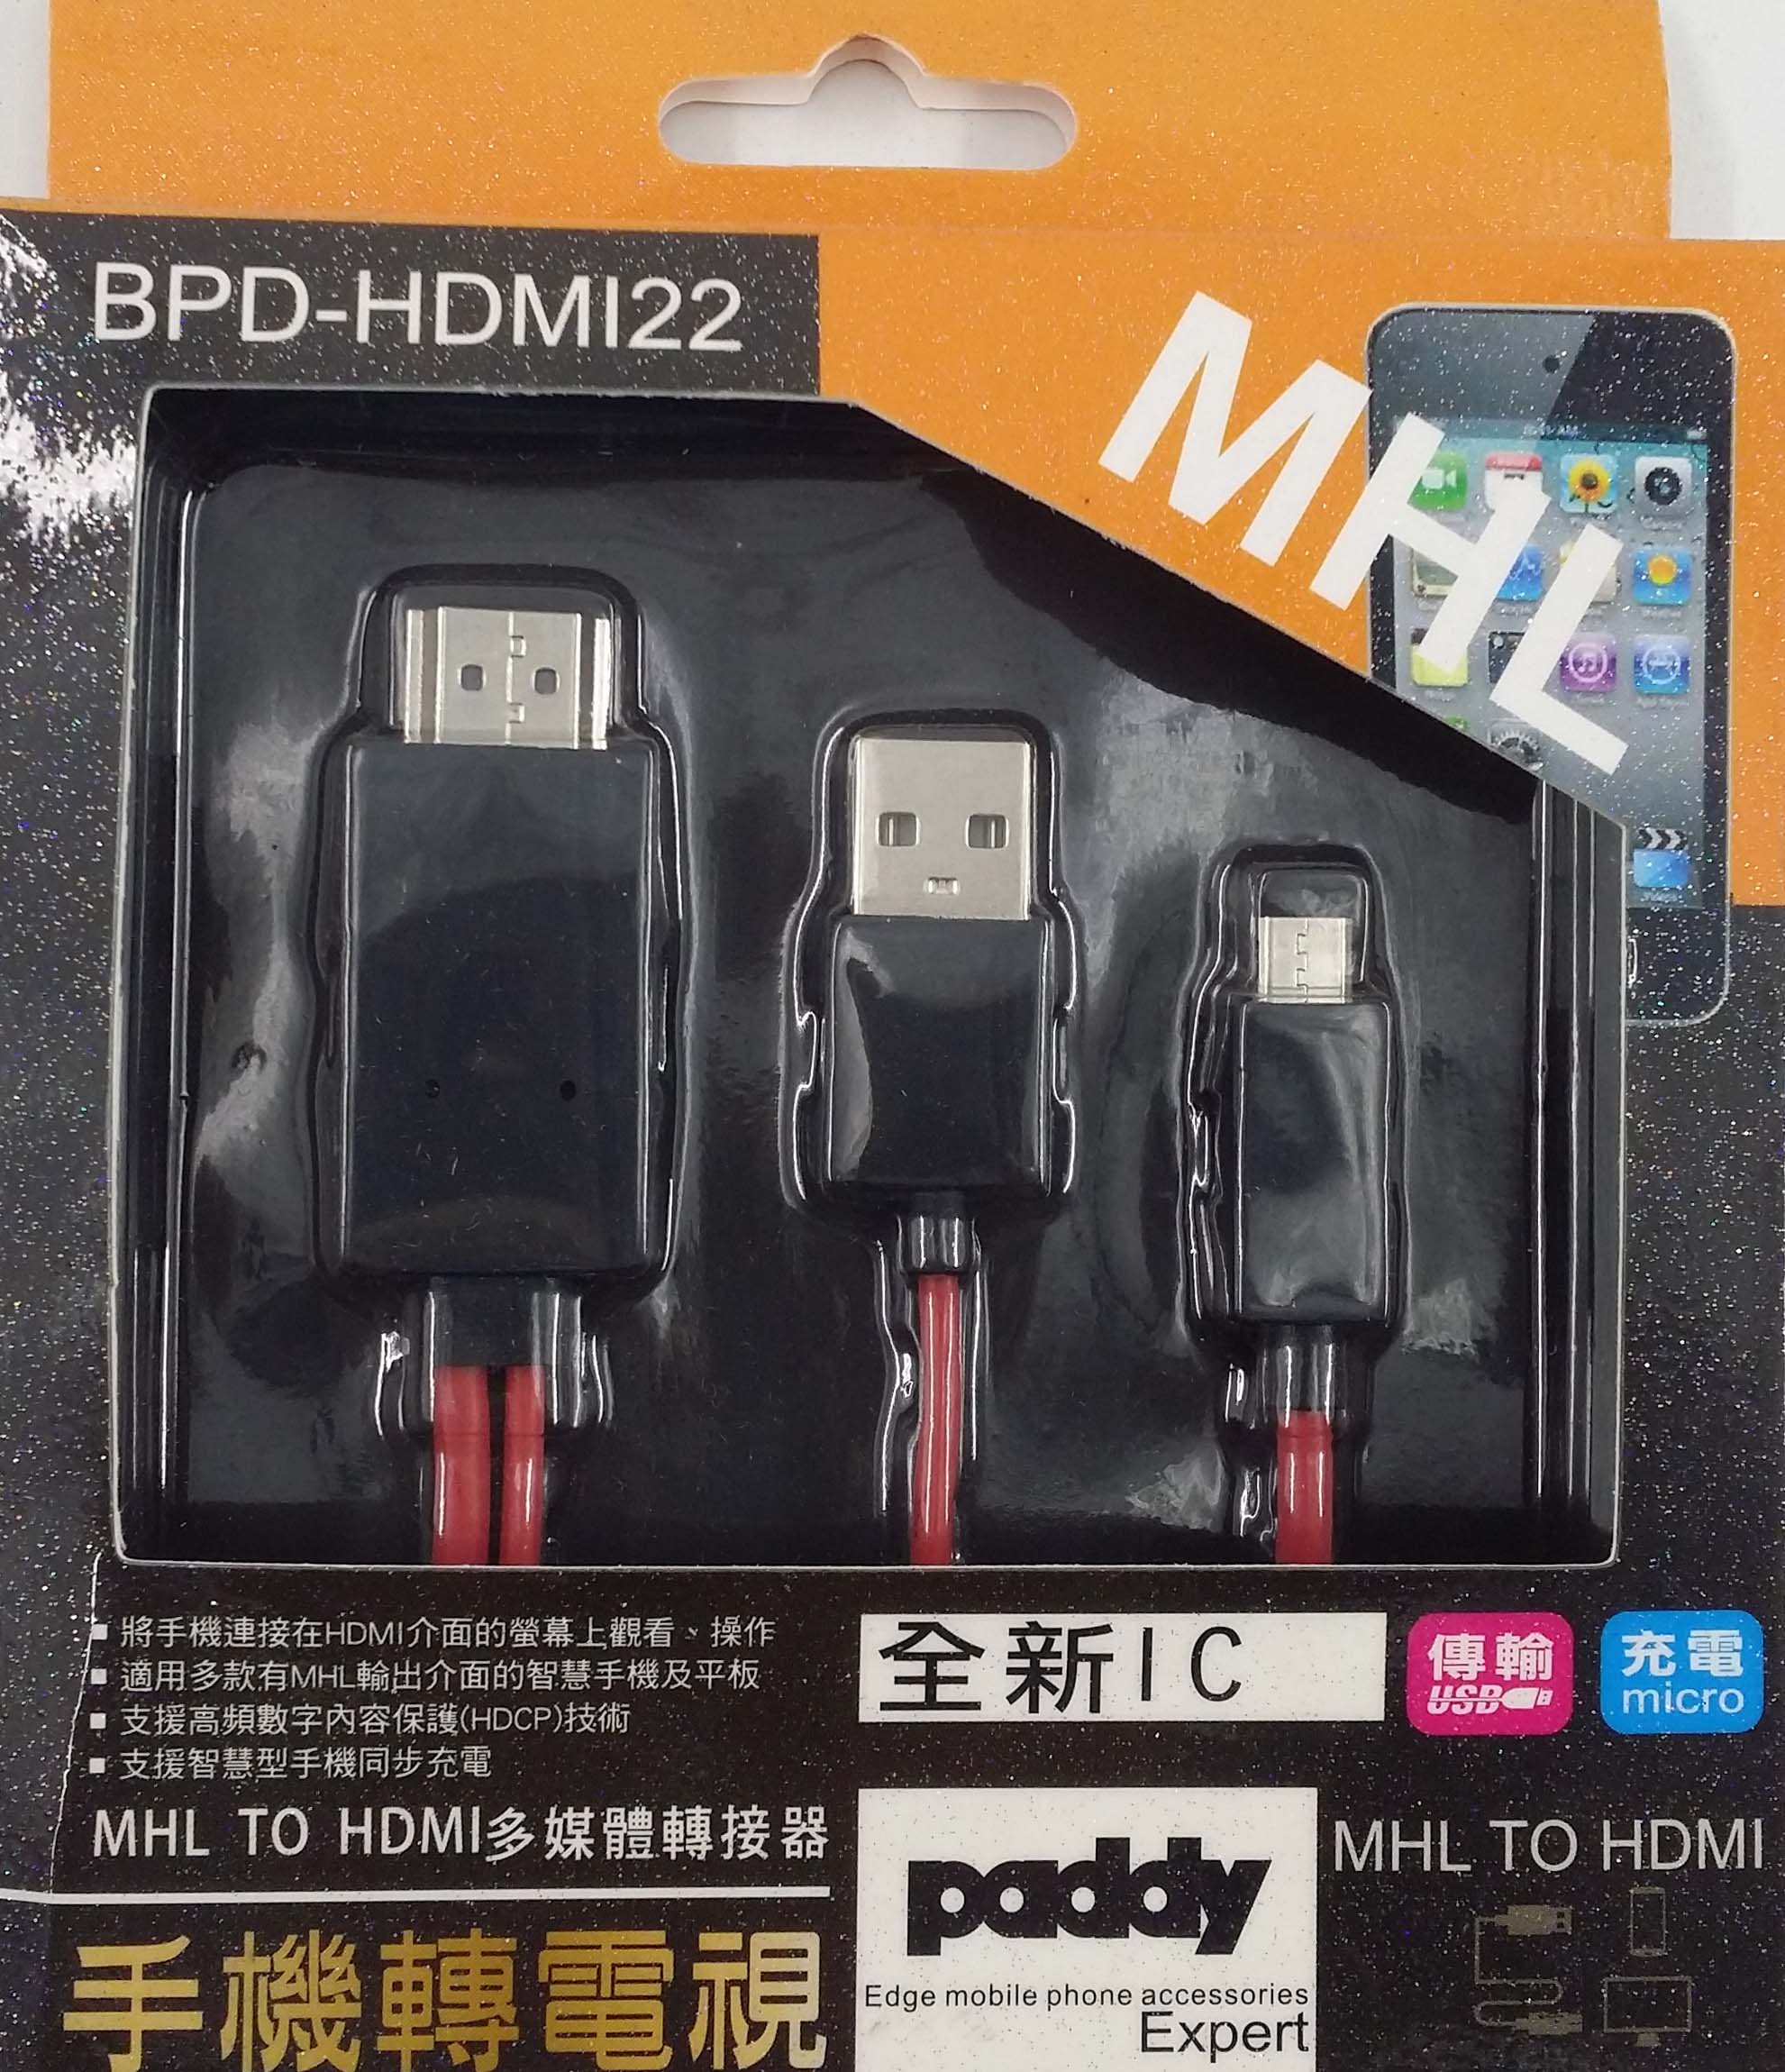 BPD-HDMI22 手機轉HDMI多媒體轉接器1.9M